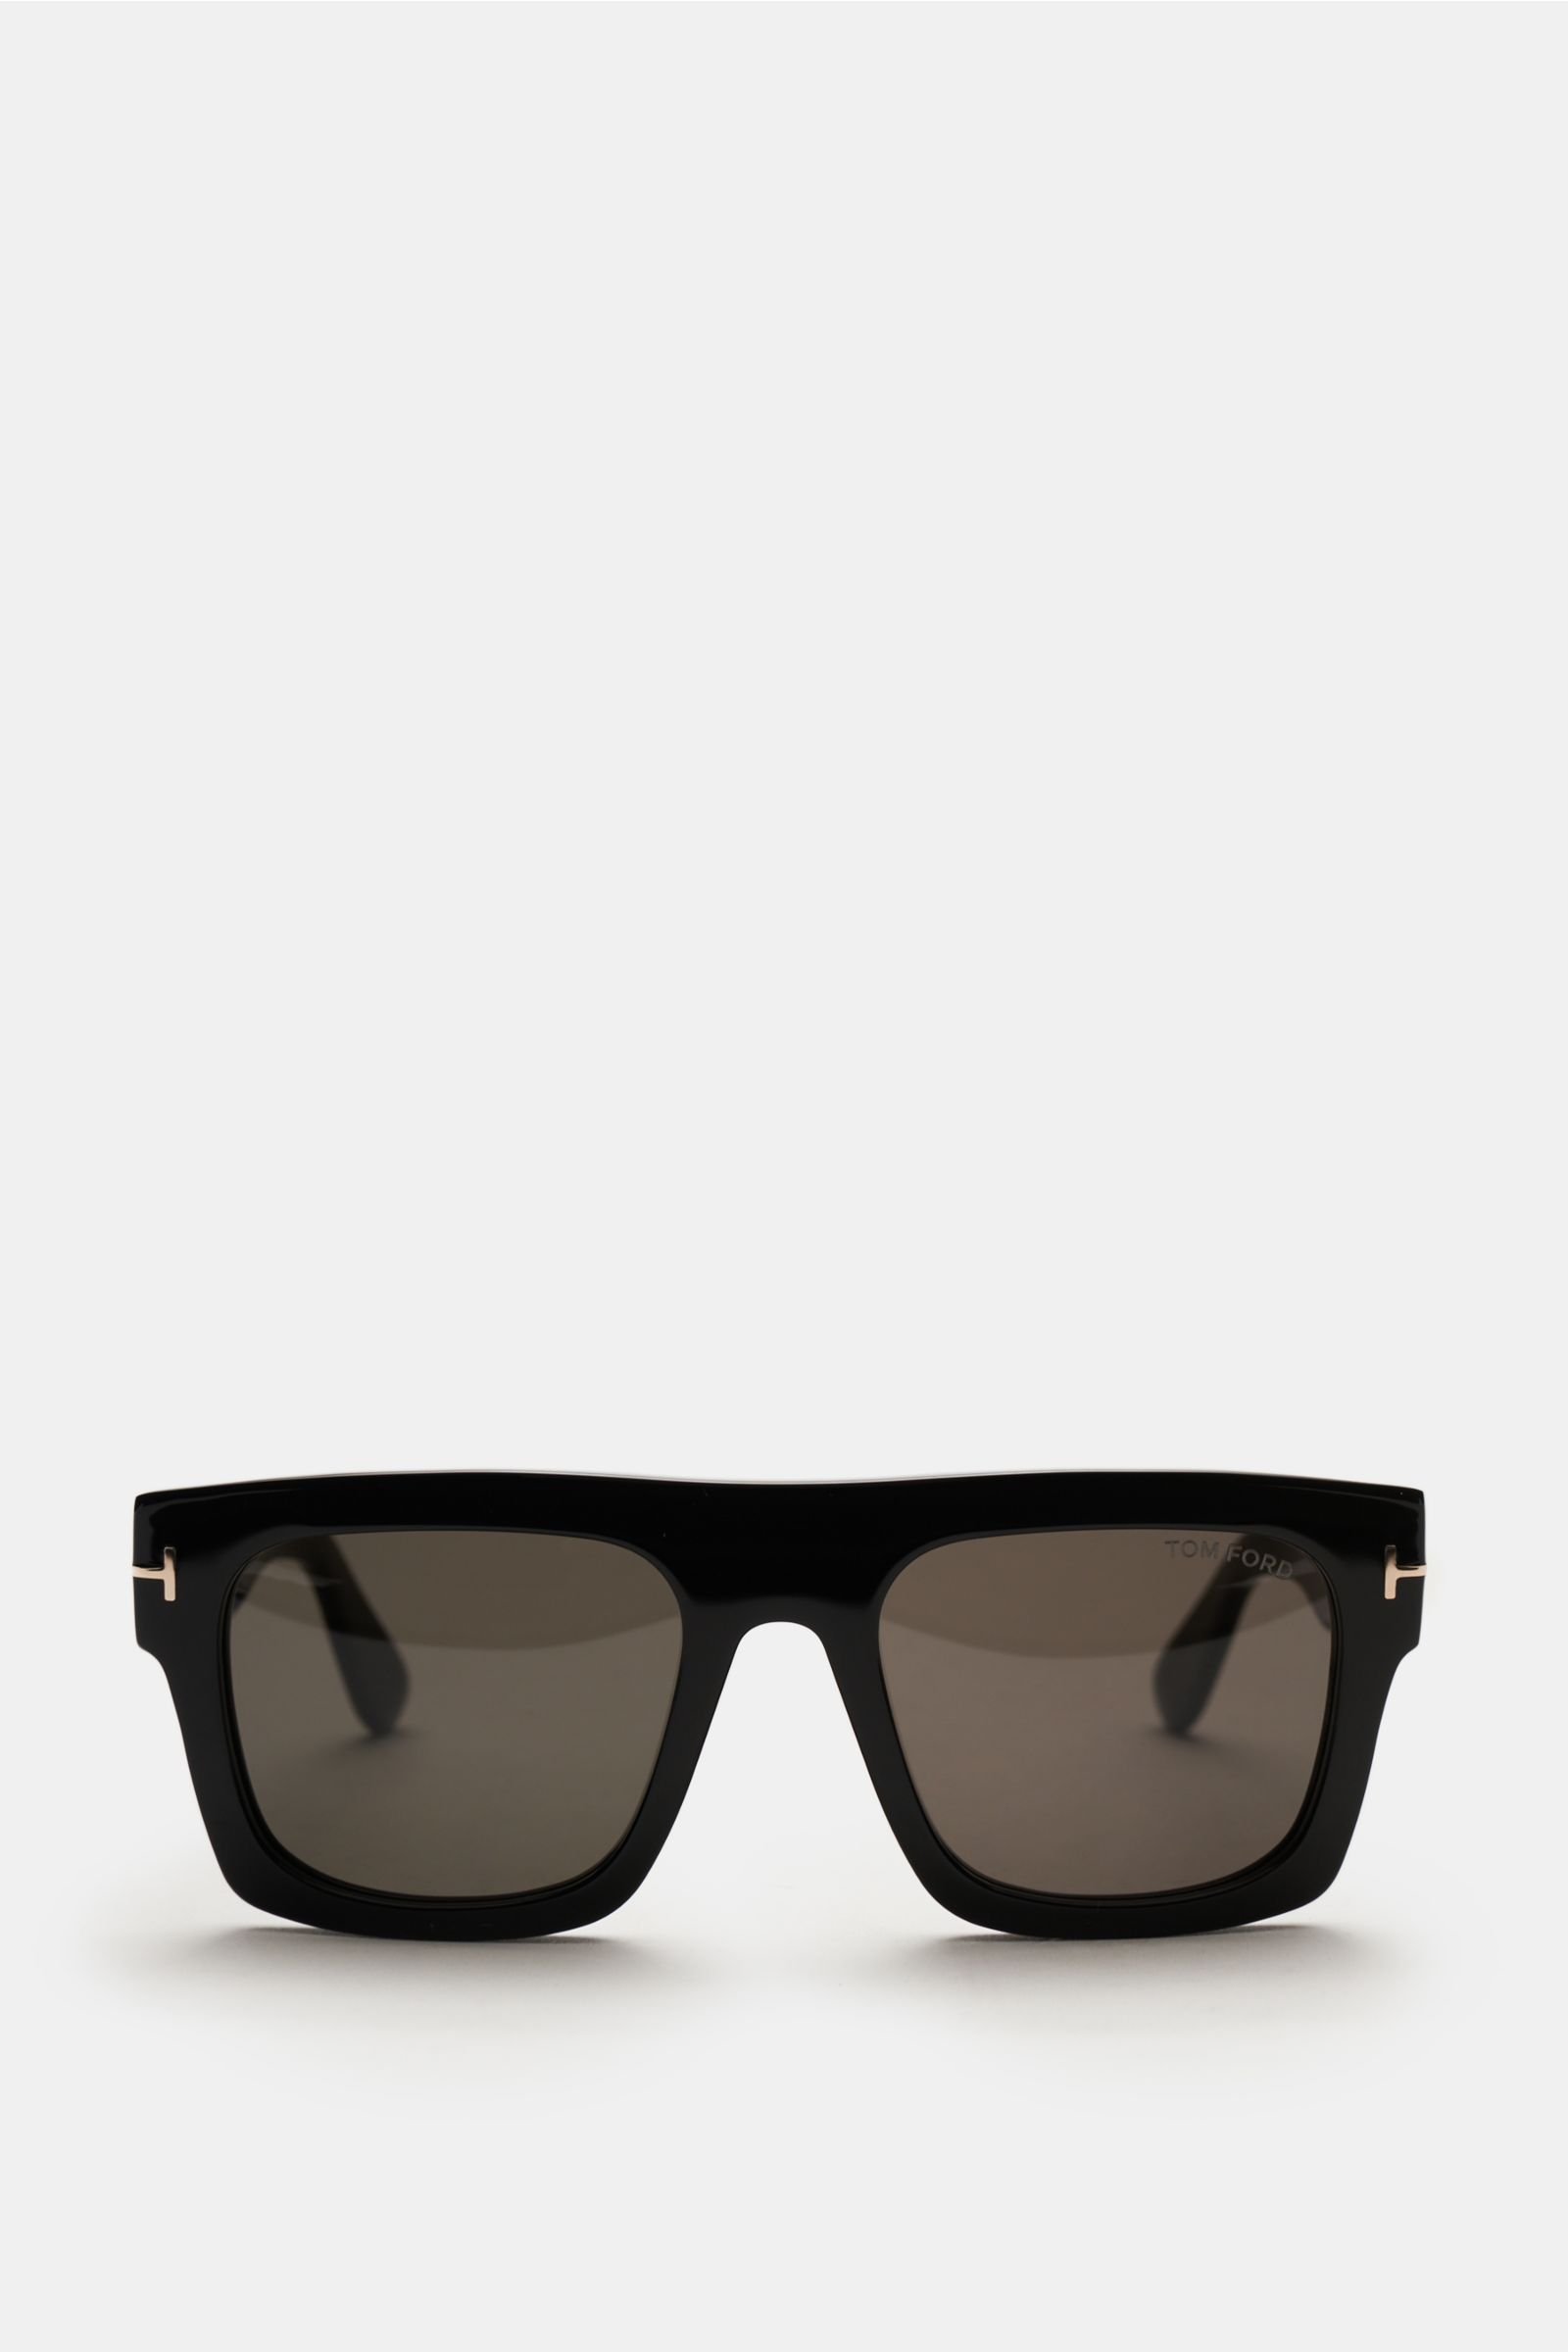 Sonnenbrille 'Fausto' schwarz/grau